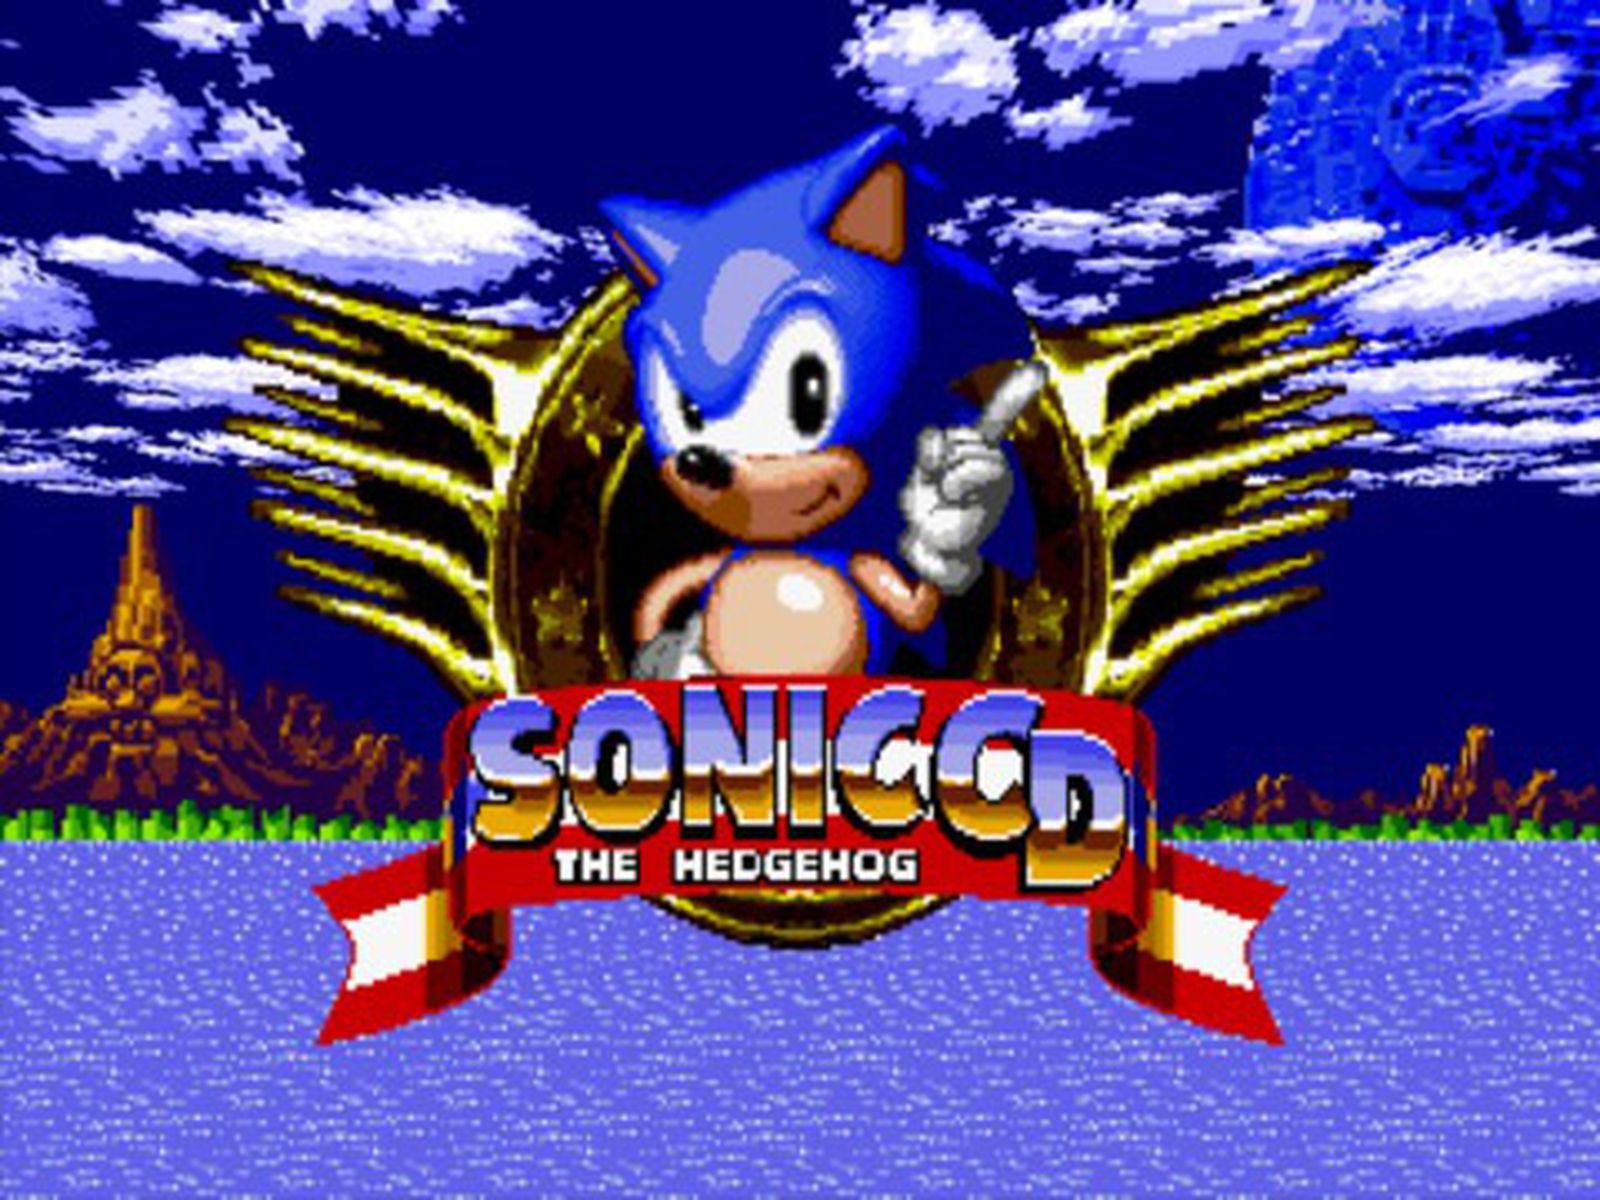 Retro Review: Sonic the Hedgehog (Sega Genesis) • AIPT